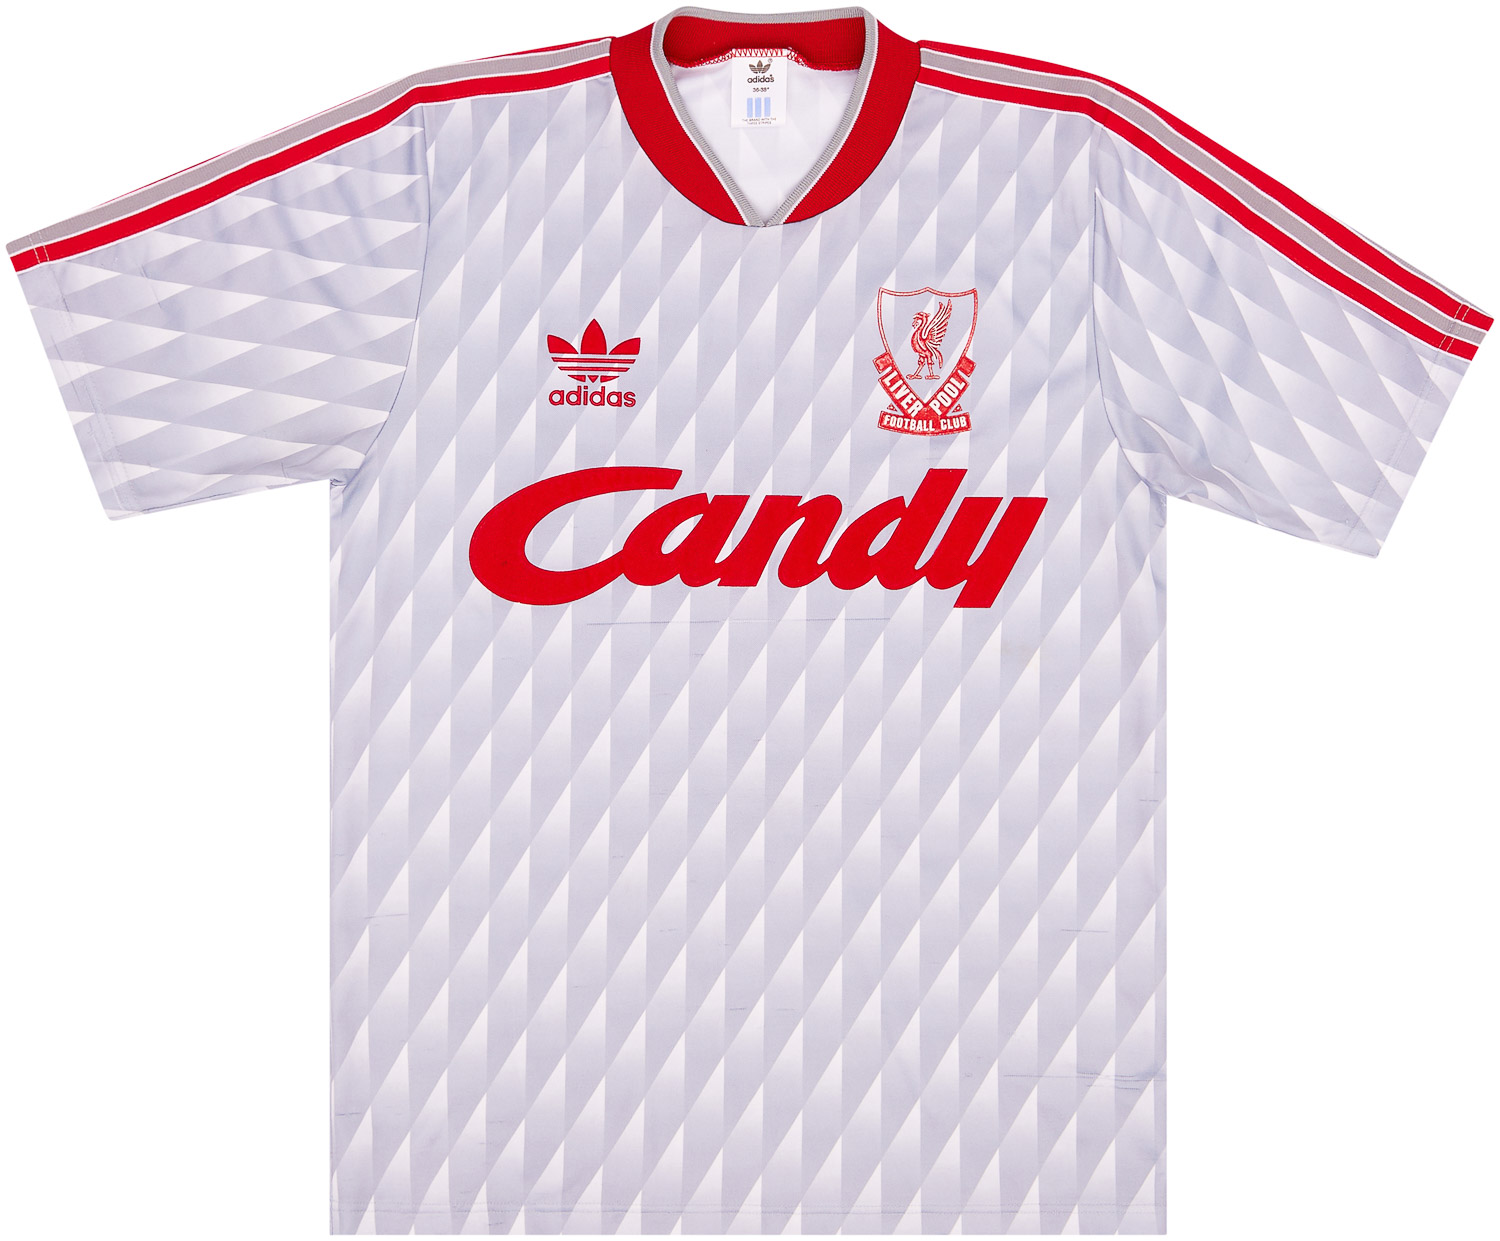 1989-91 Liverpool Away Shirt - 6/10 - ()